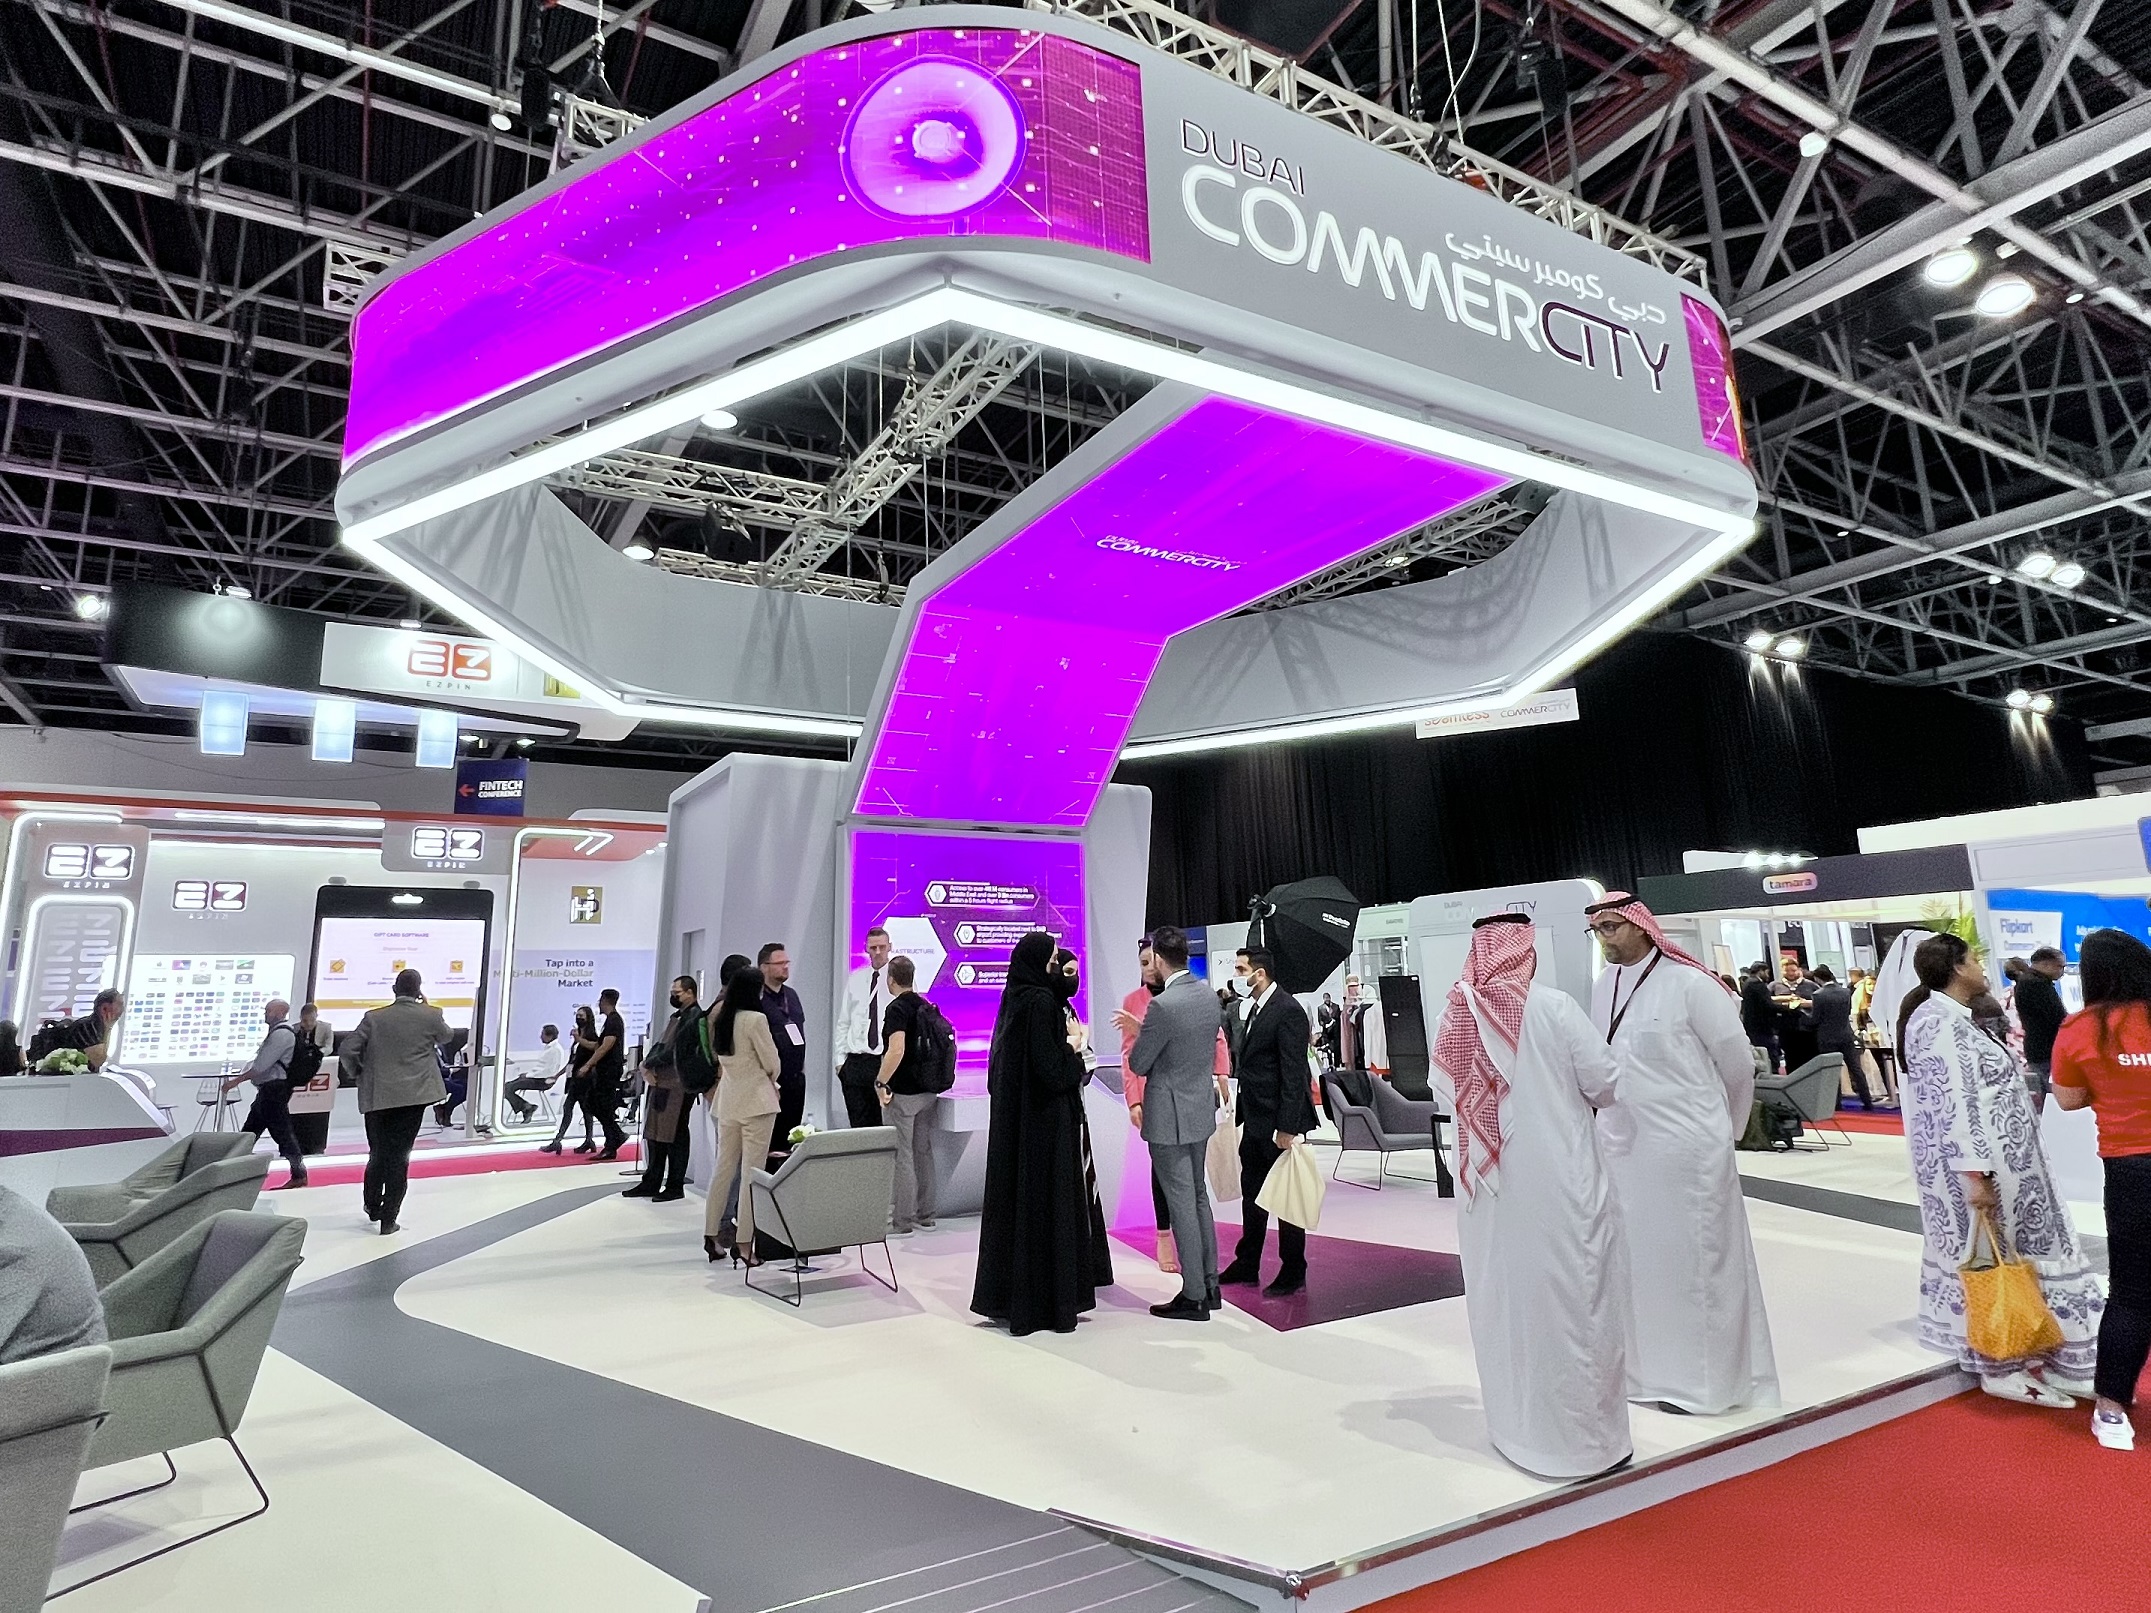 Dubai CommerCity Showcases Its Incorporation Of The Latest Technology